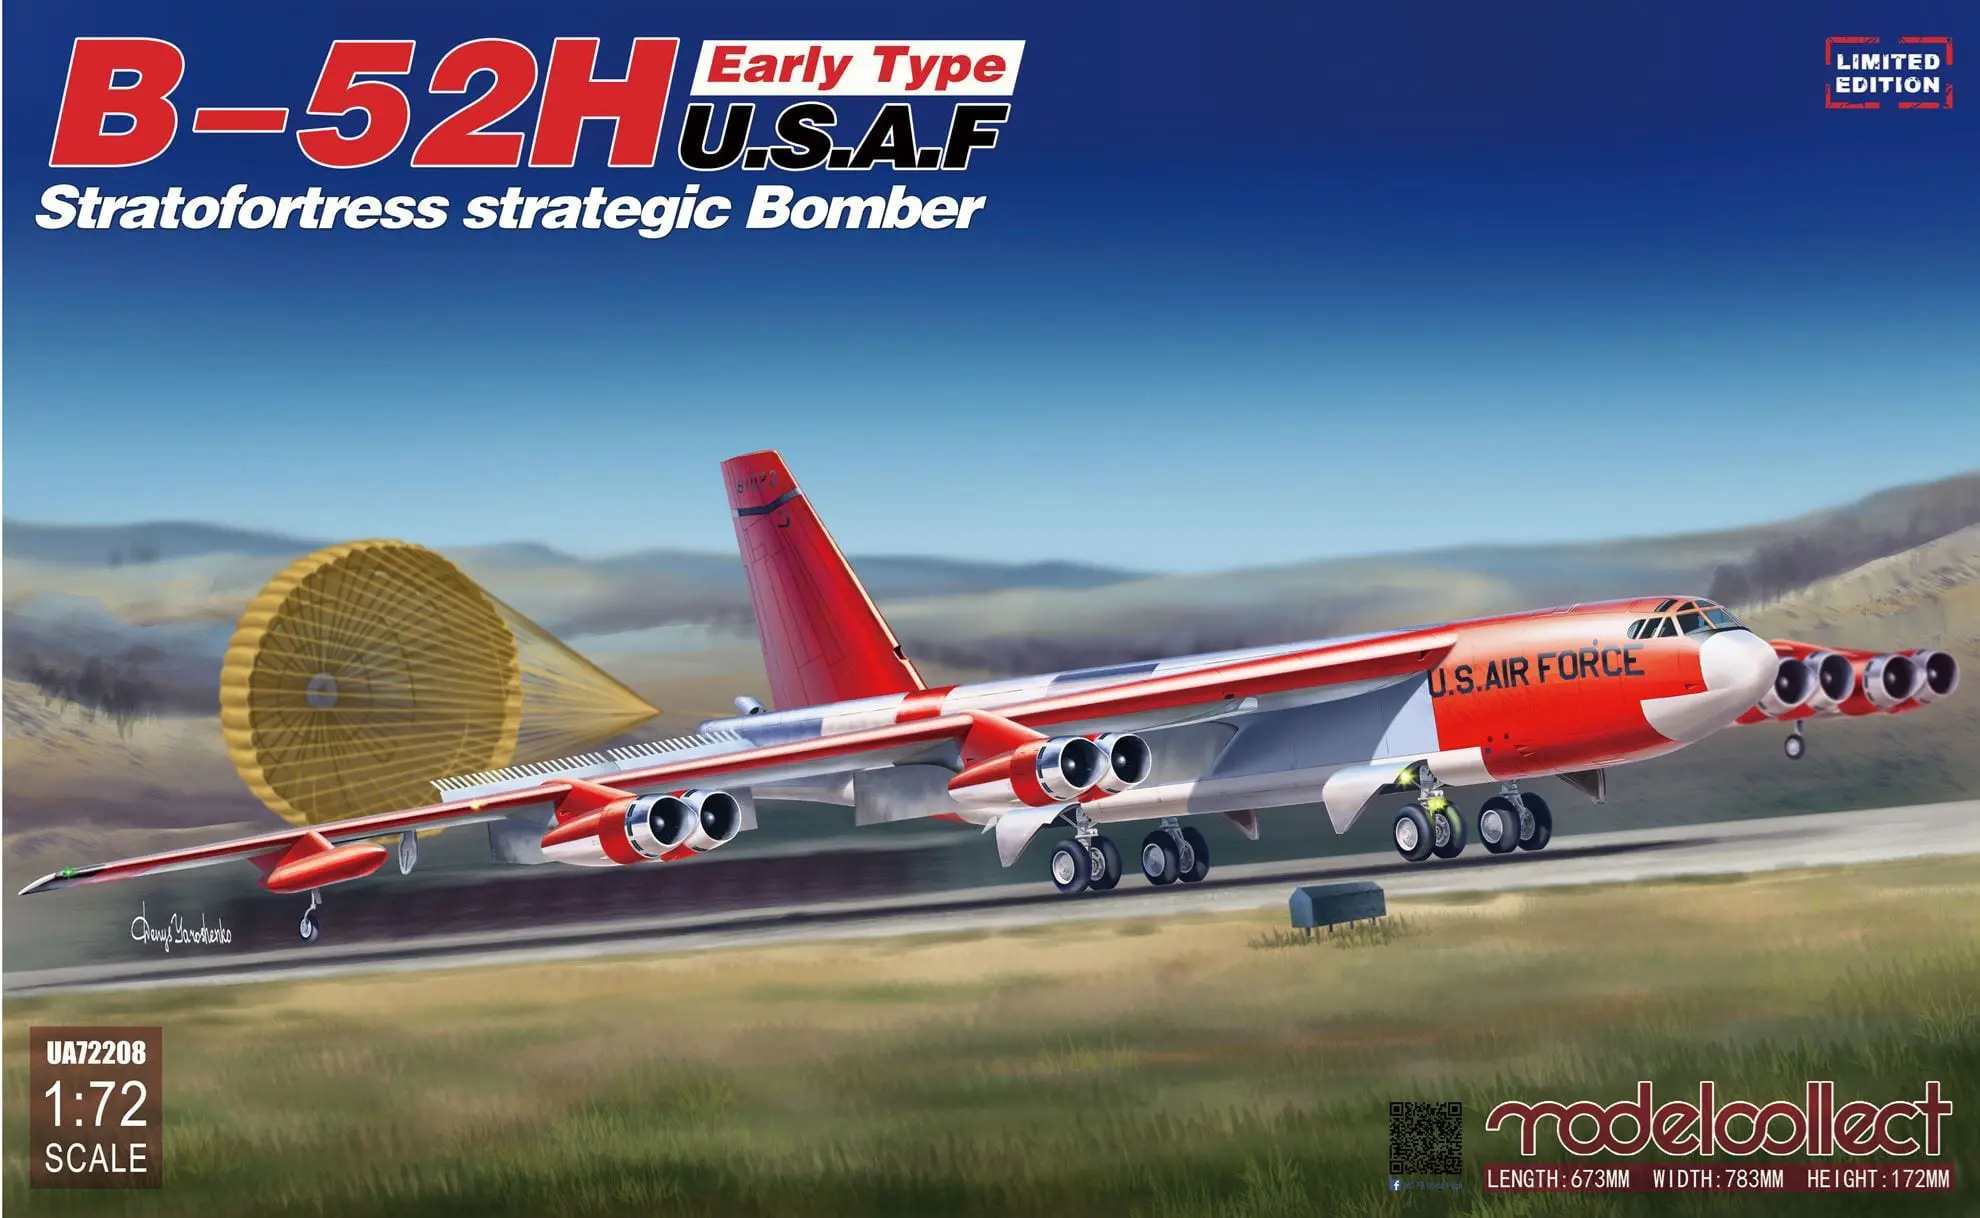 Galaxy C144001 B-52H Strategic Bomber Canopy Wheels Mask for Great Wall L1008 